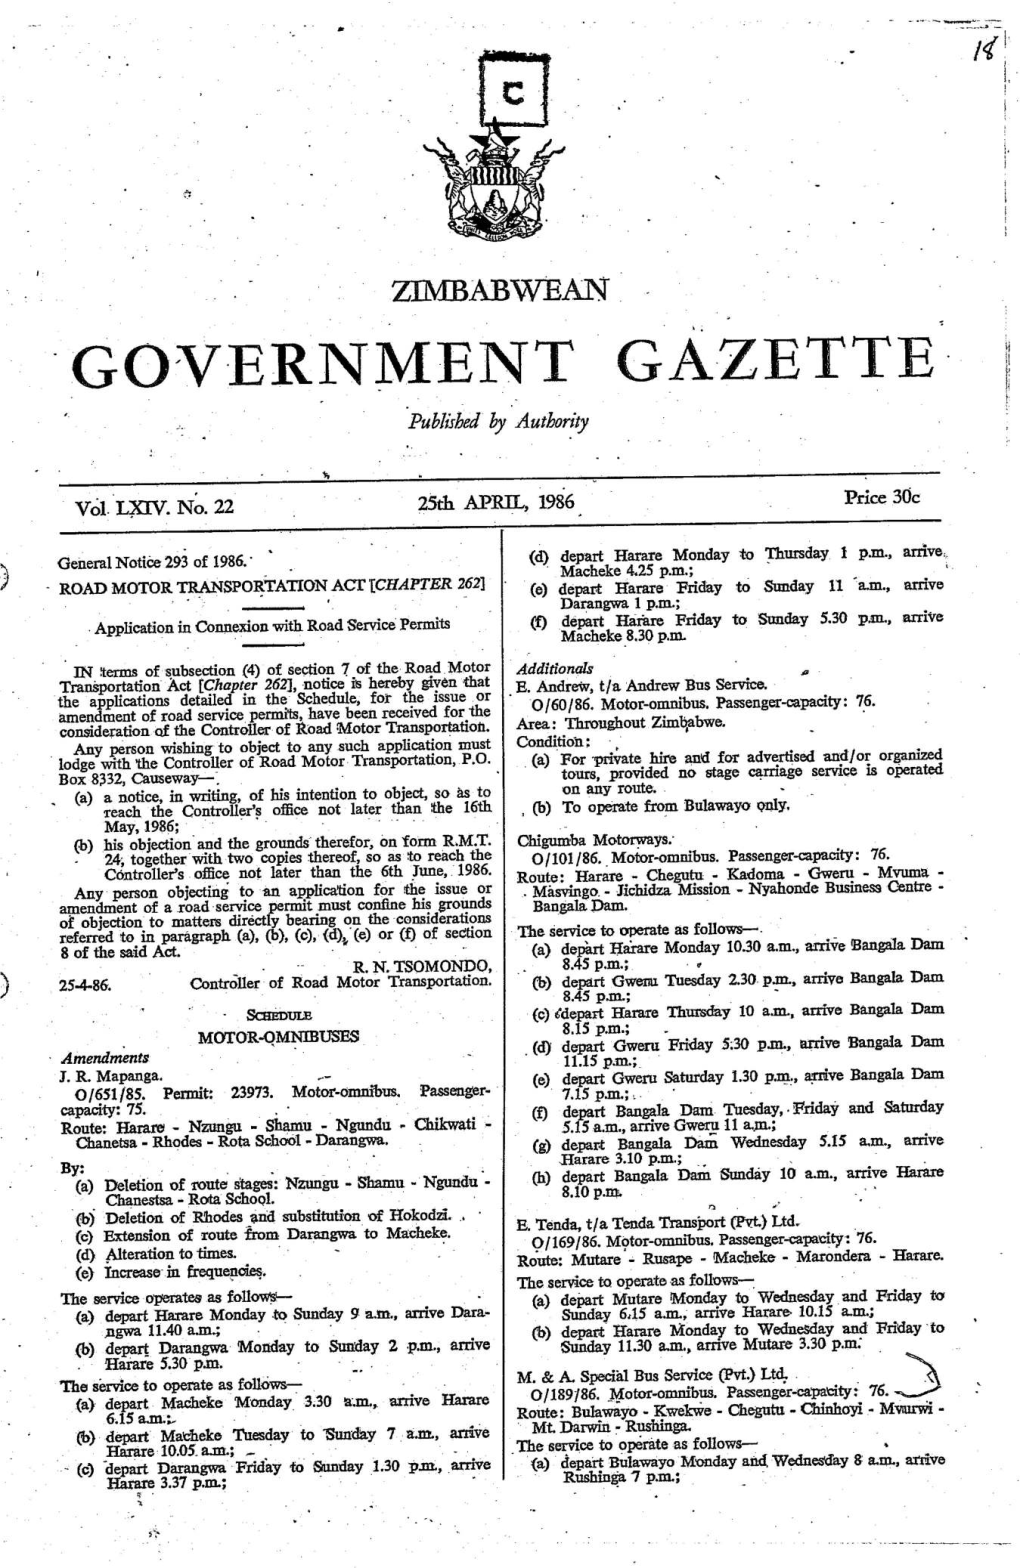 Government Gazette|